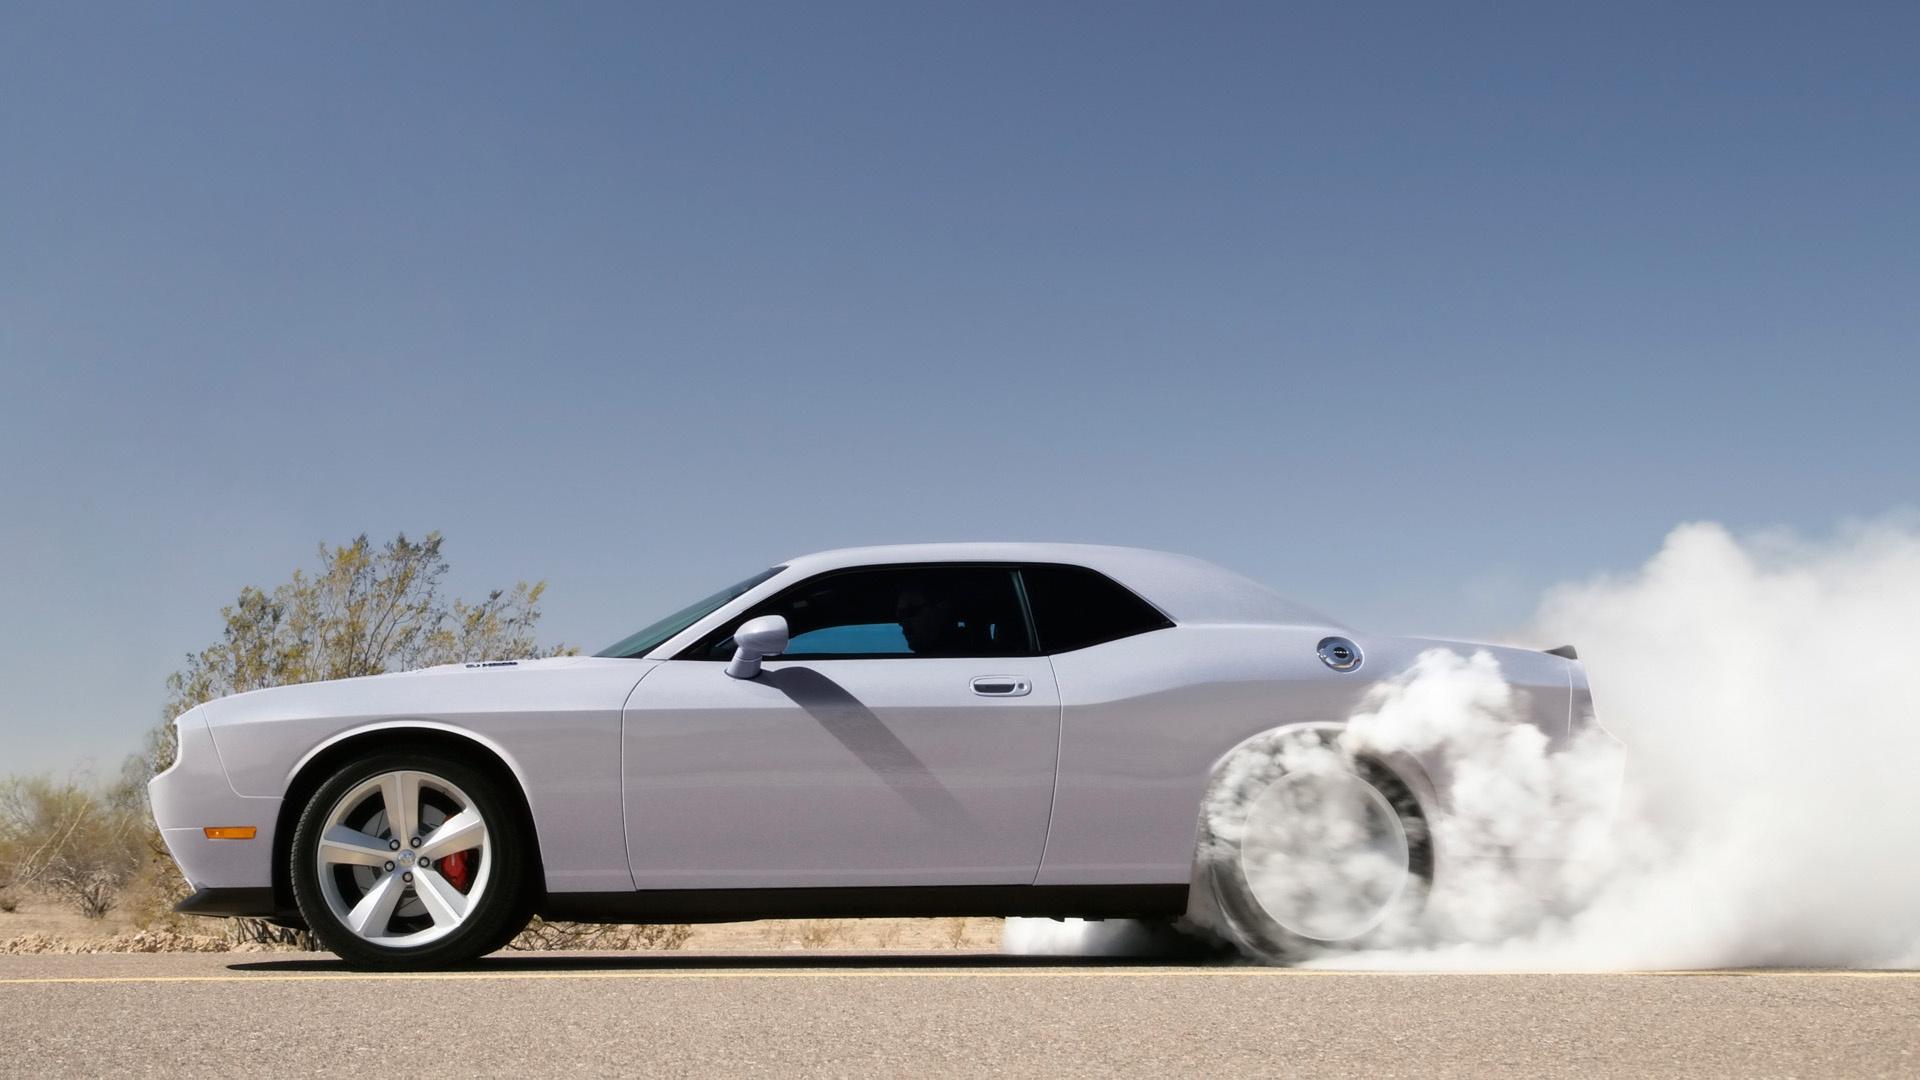 2009 Dodge Challenger Srt8 Side Smoke 1920x1080